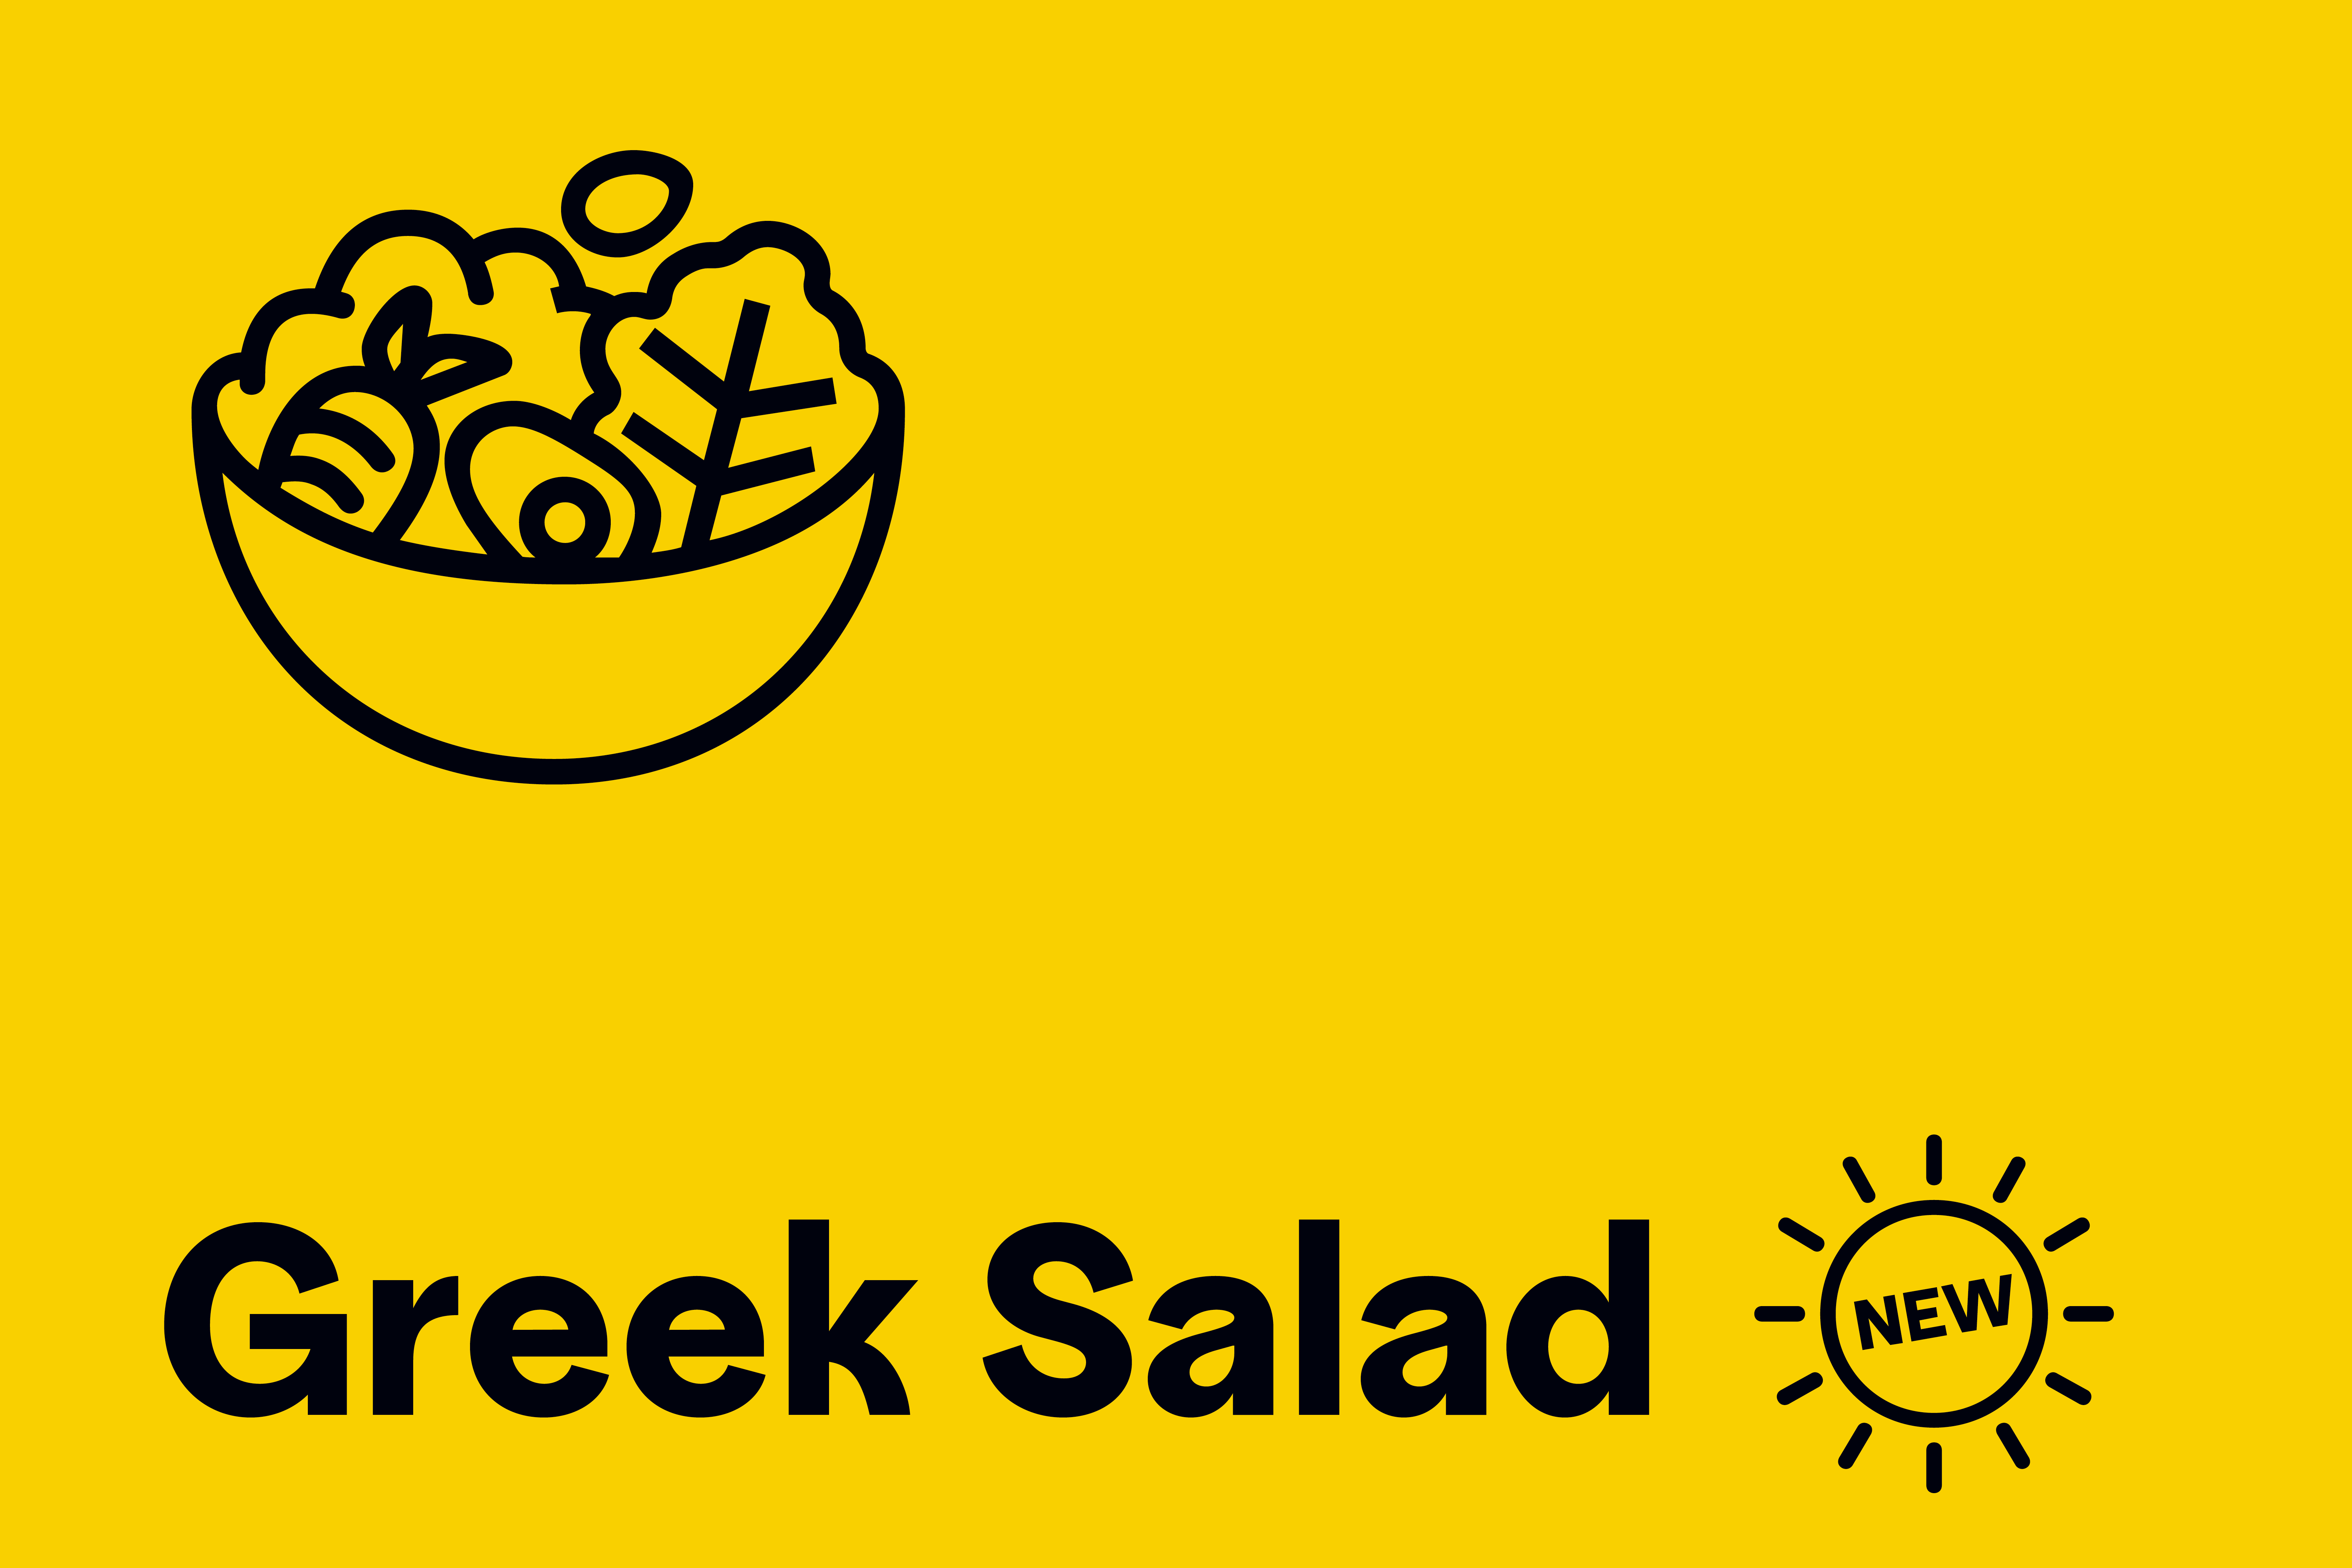 Cava greek salad